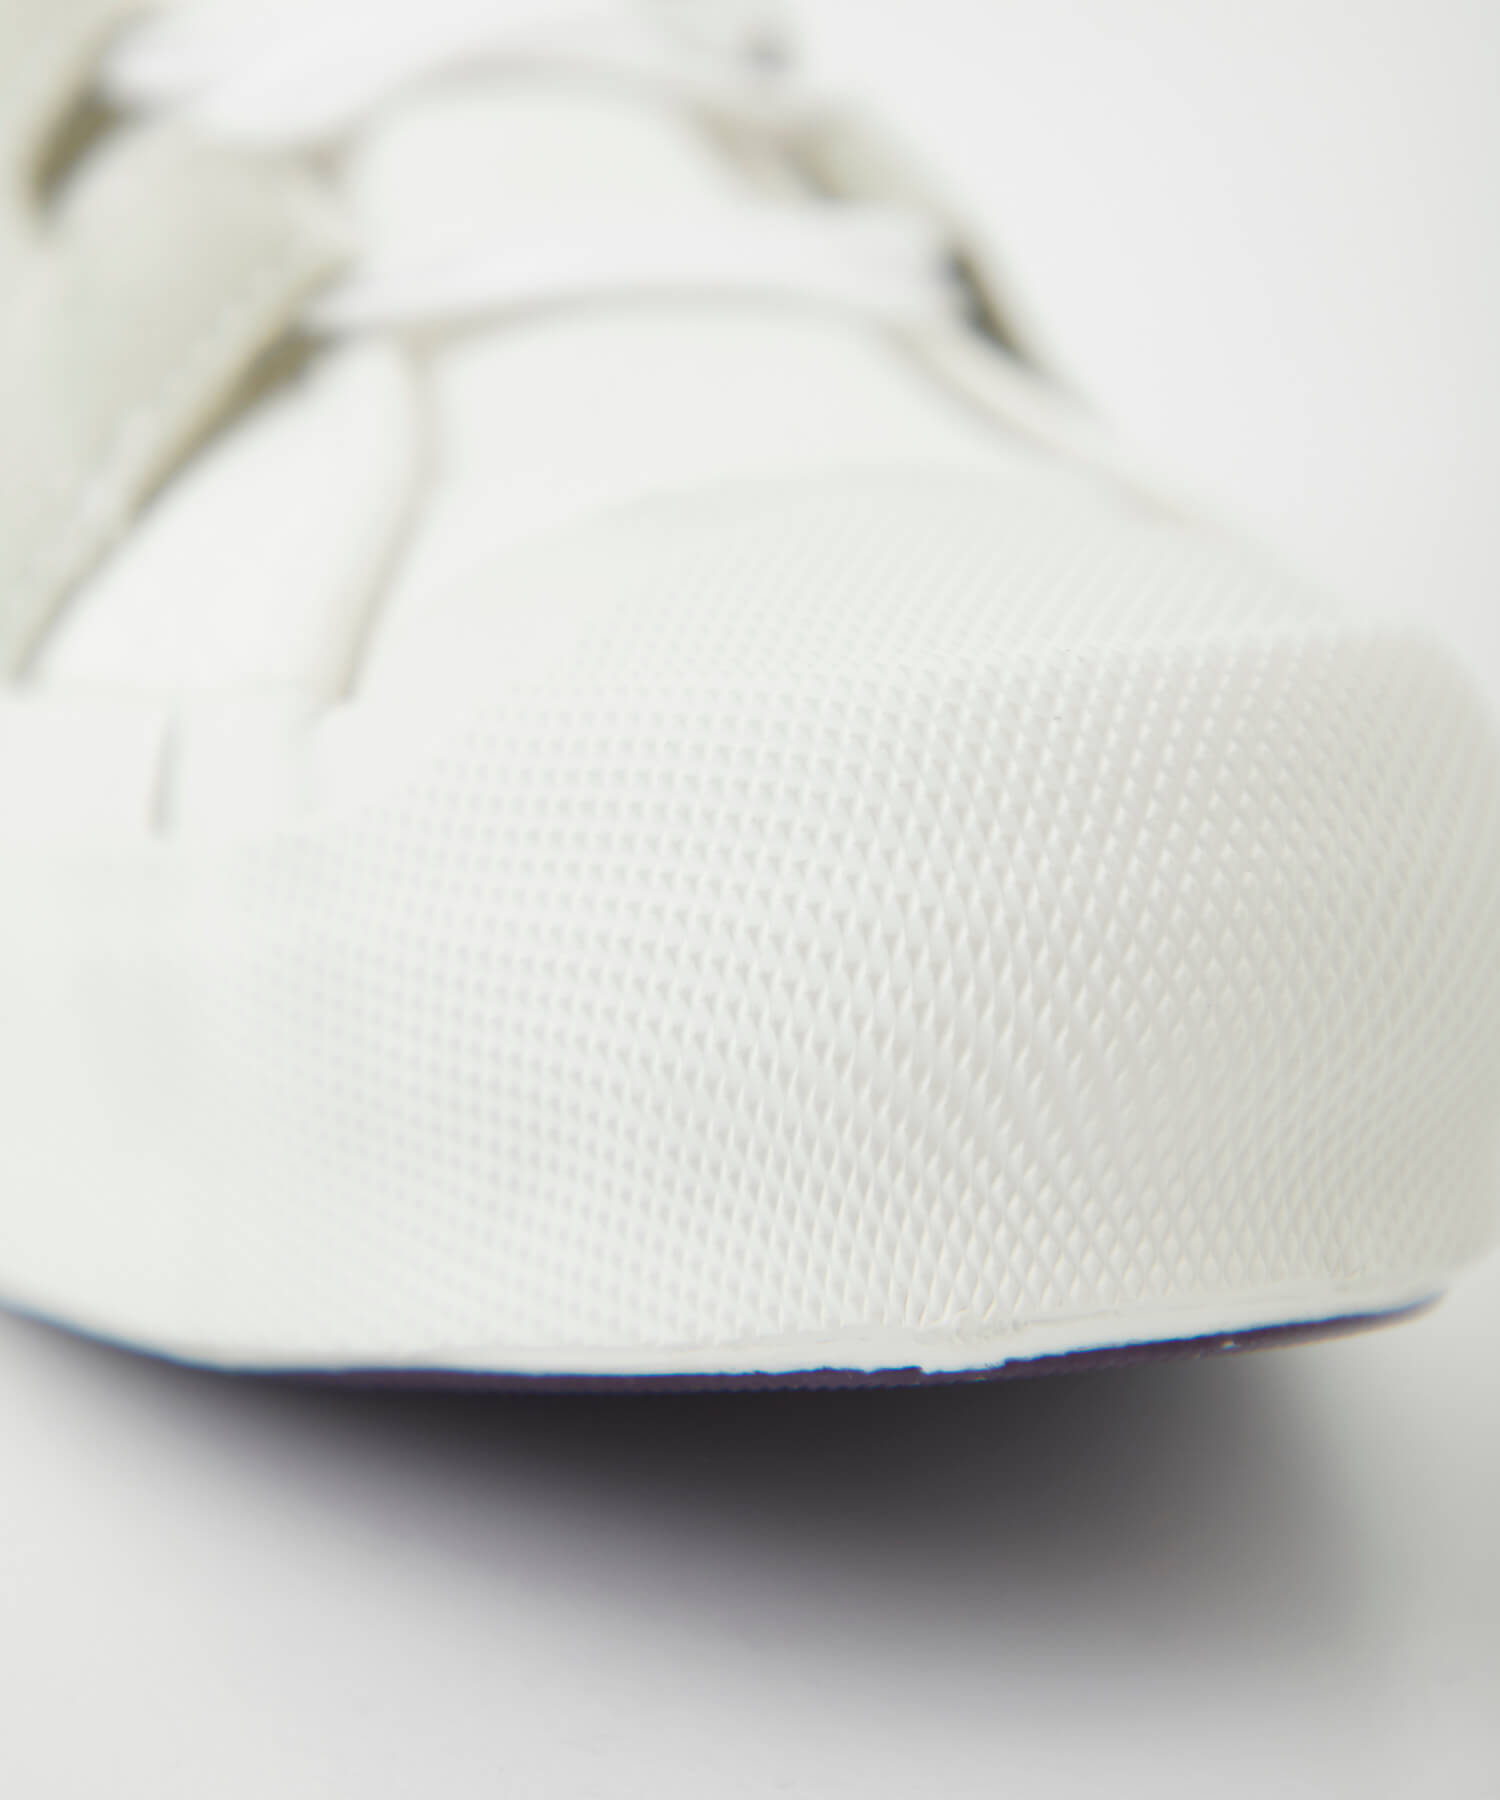 Asymmetric Ghillie Sneaker -Cotton Canvas NEEDLES